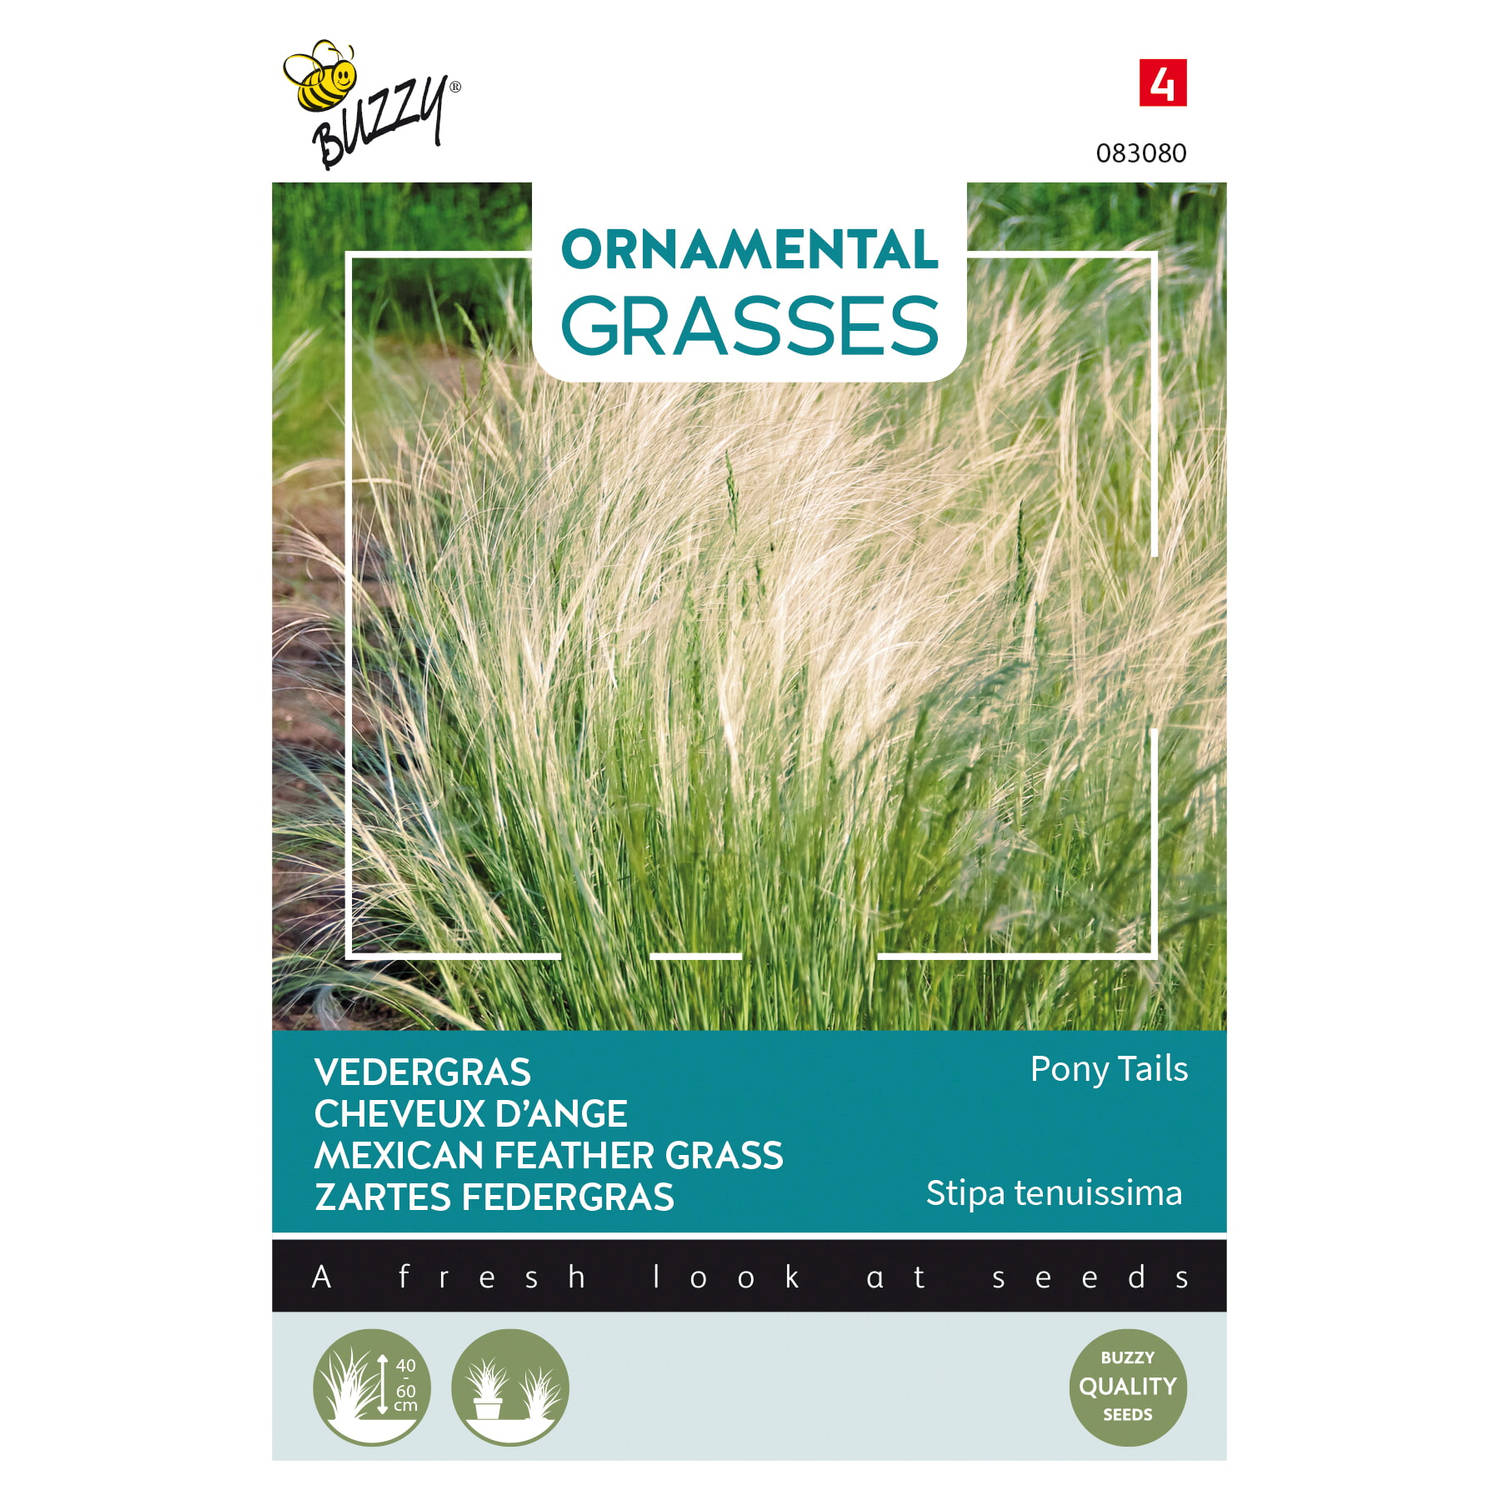 Buzzy - Ornamental Grasses, Stipa tenuissima 'Pony Tails'